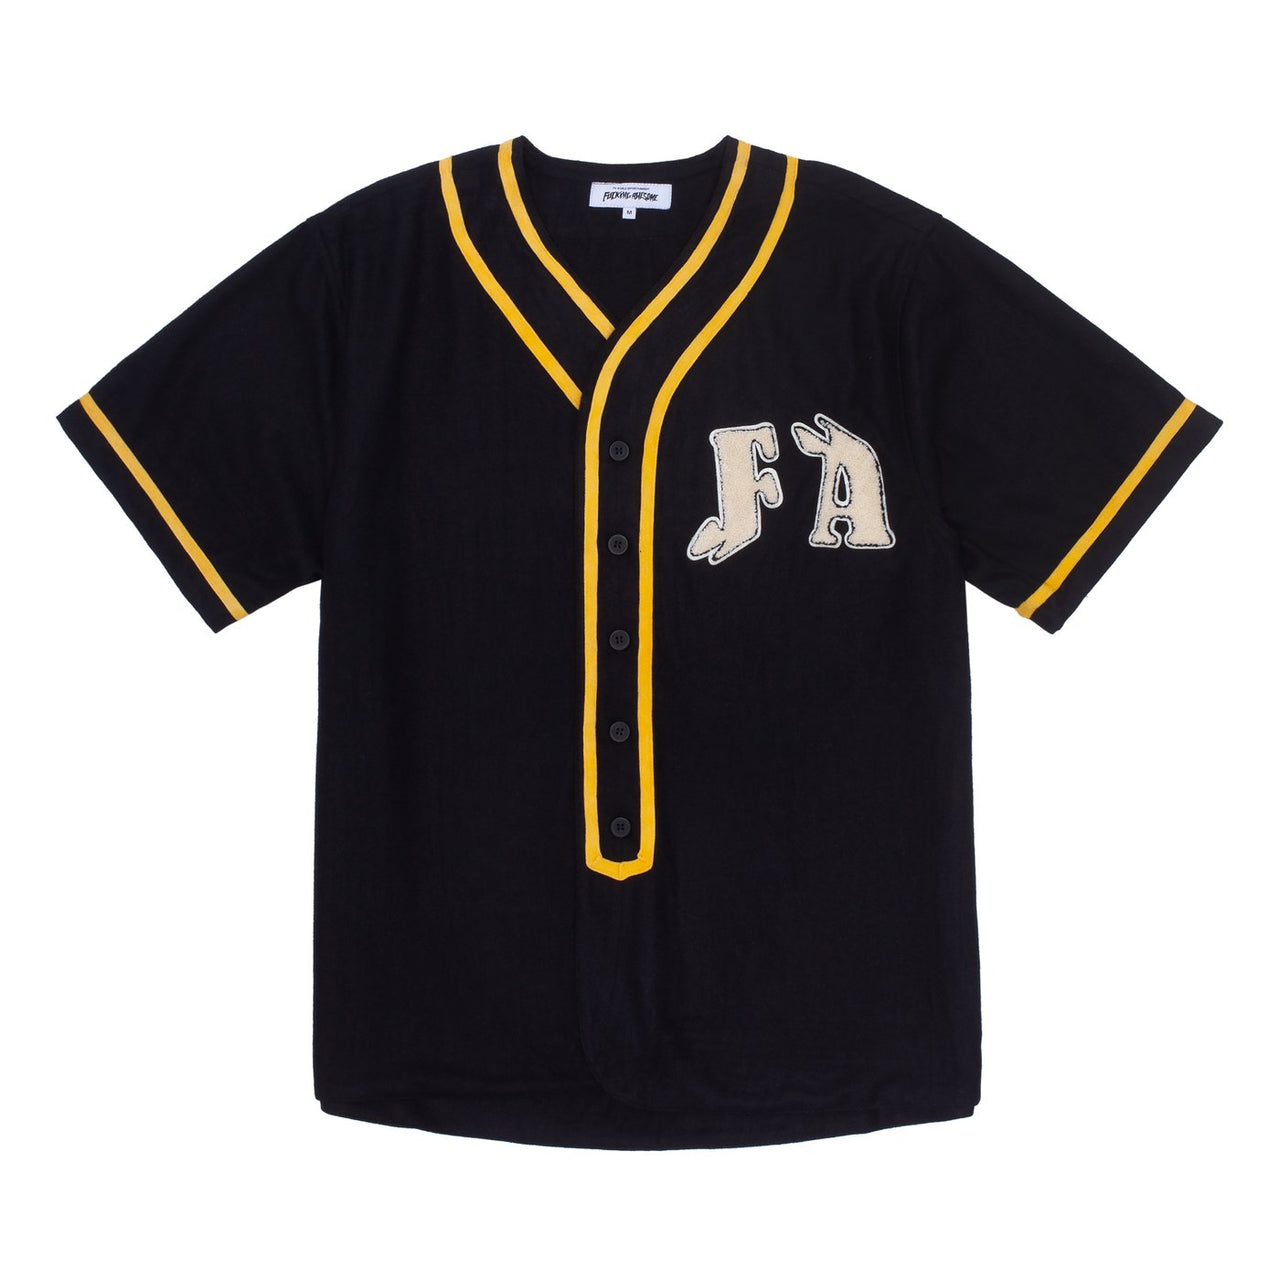 Baseball OverShirt Black Yellow